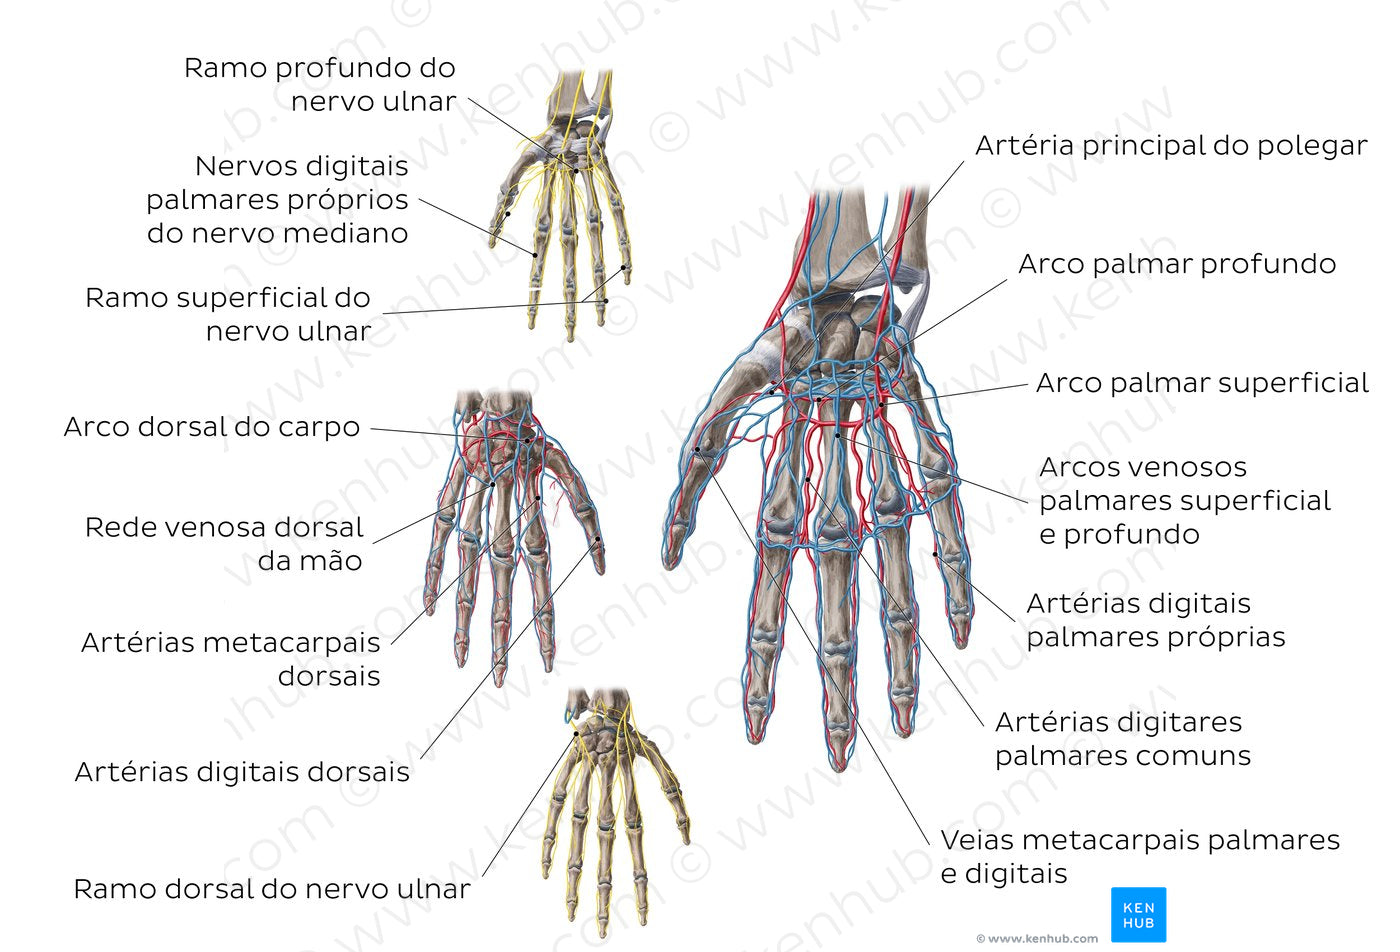 Neurovasculature of the hand (Portuguese)